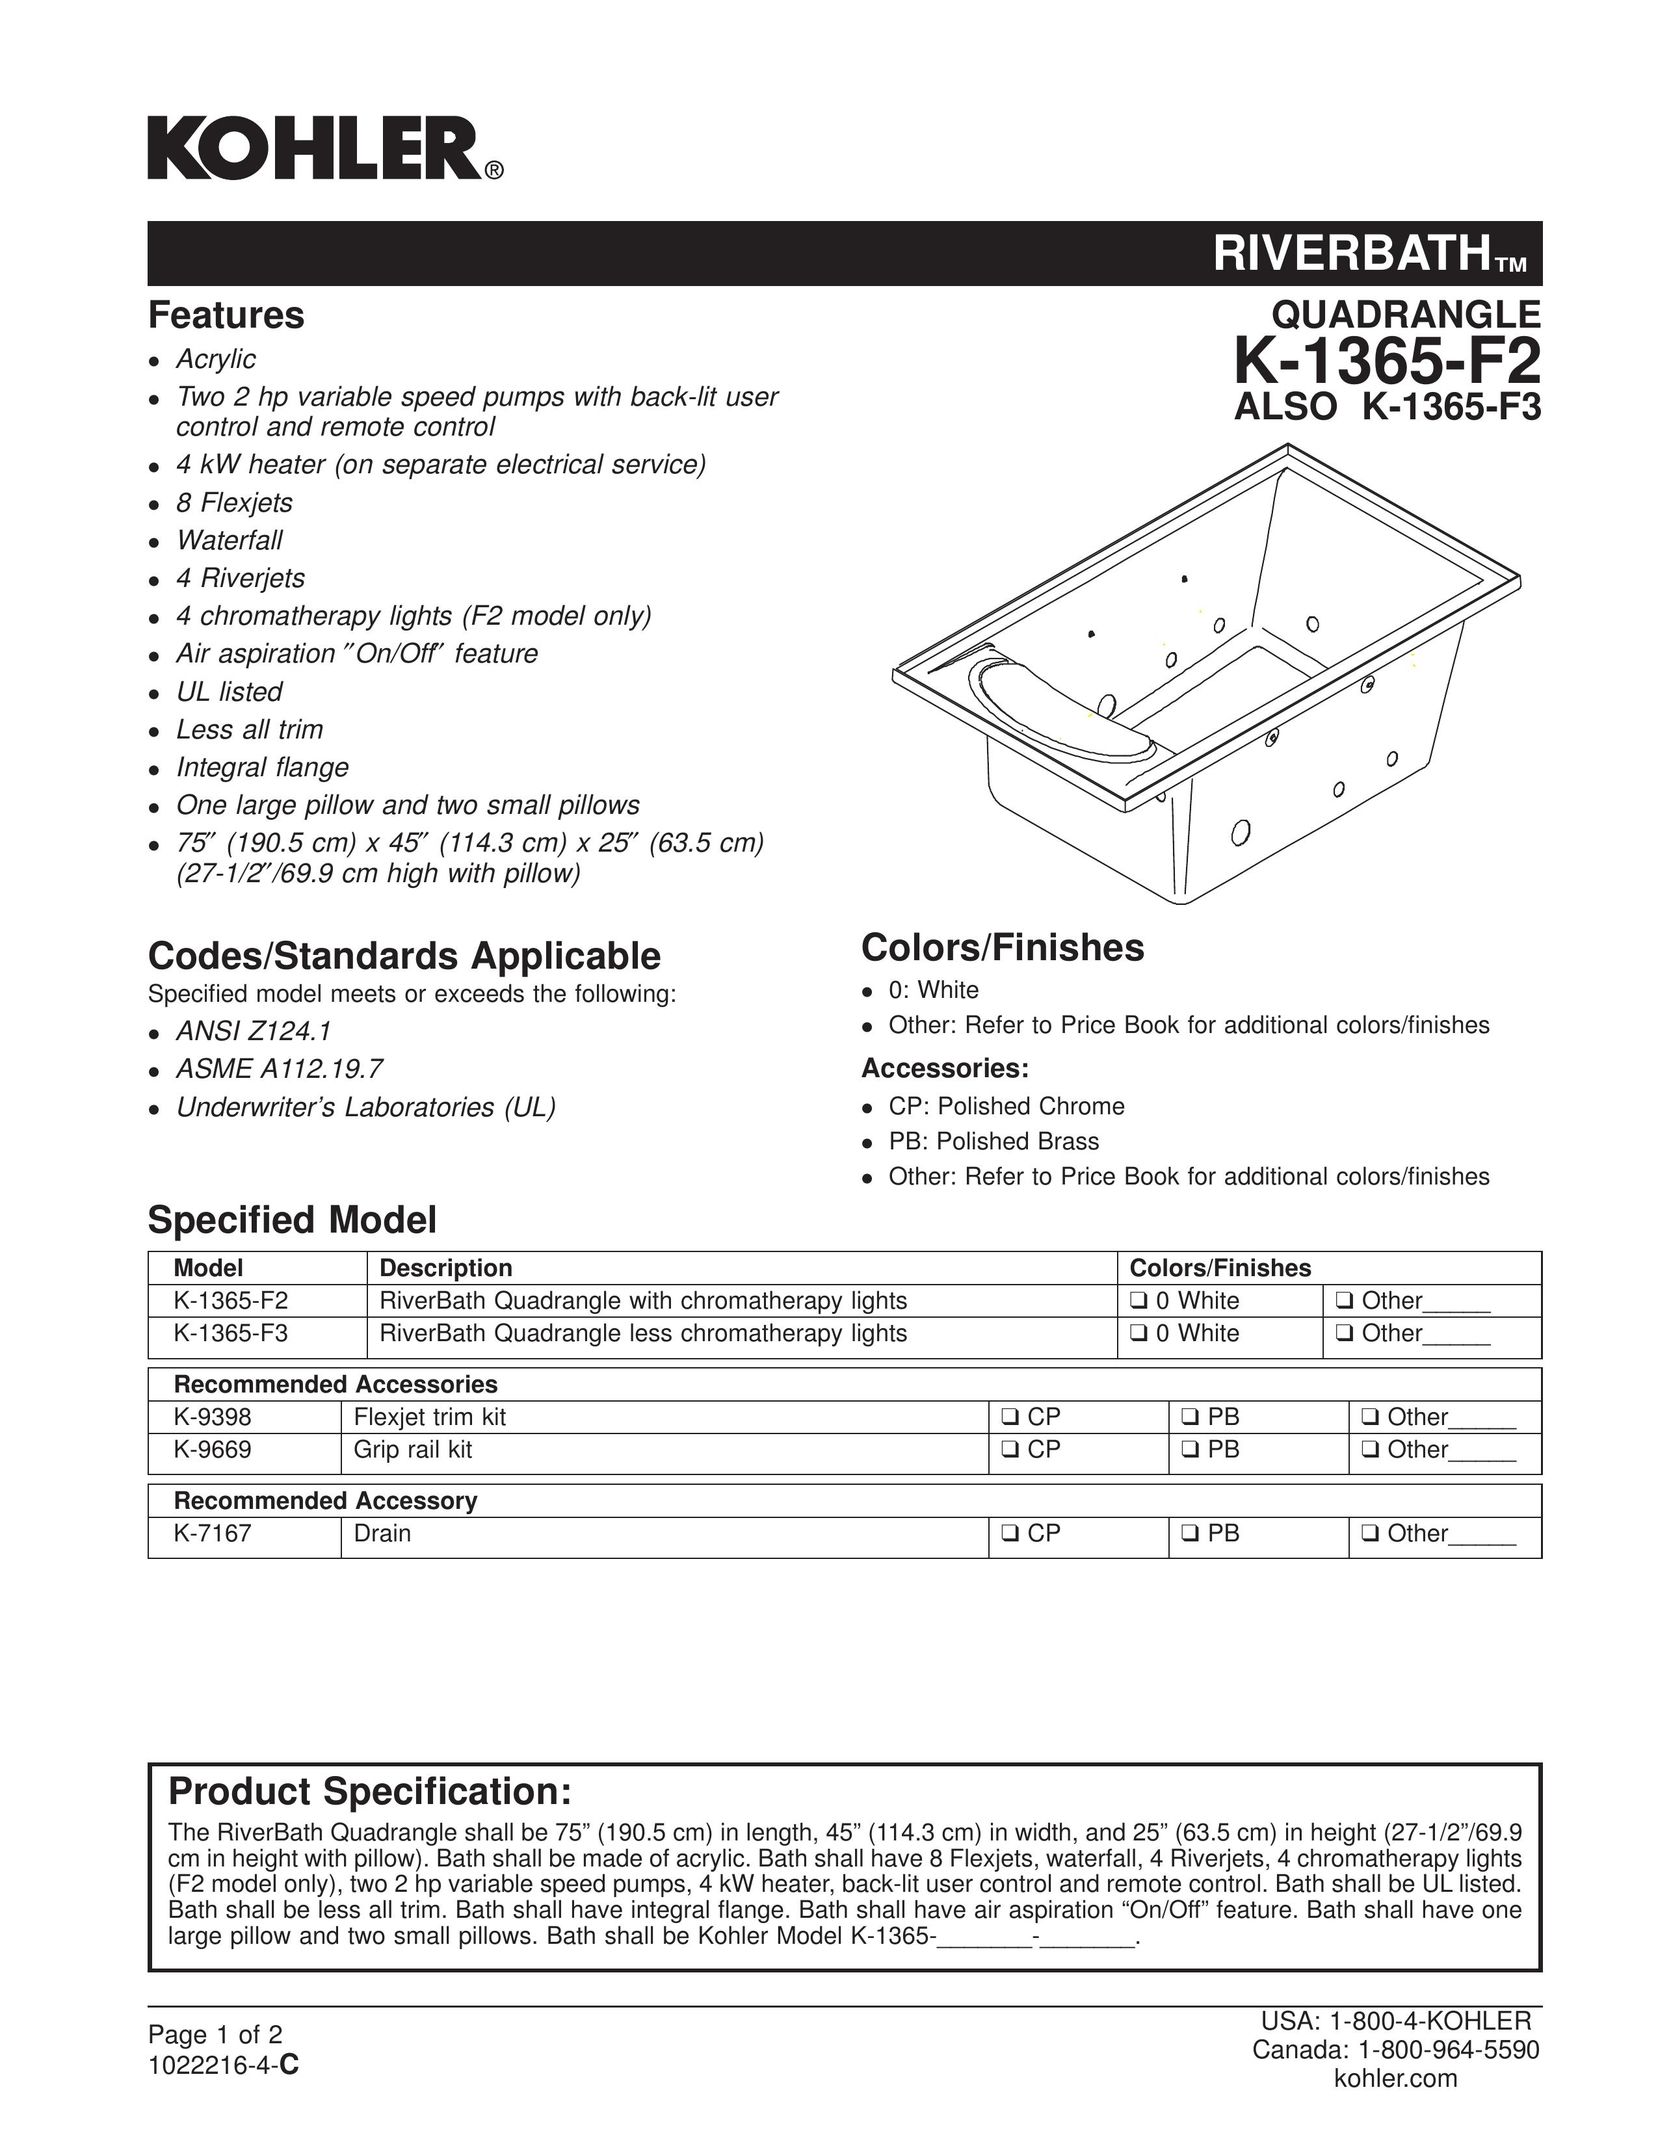 Kohler K-1365-F2 Plumbing Product User Manual